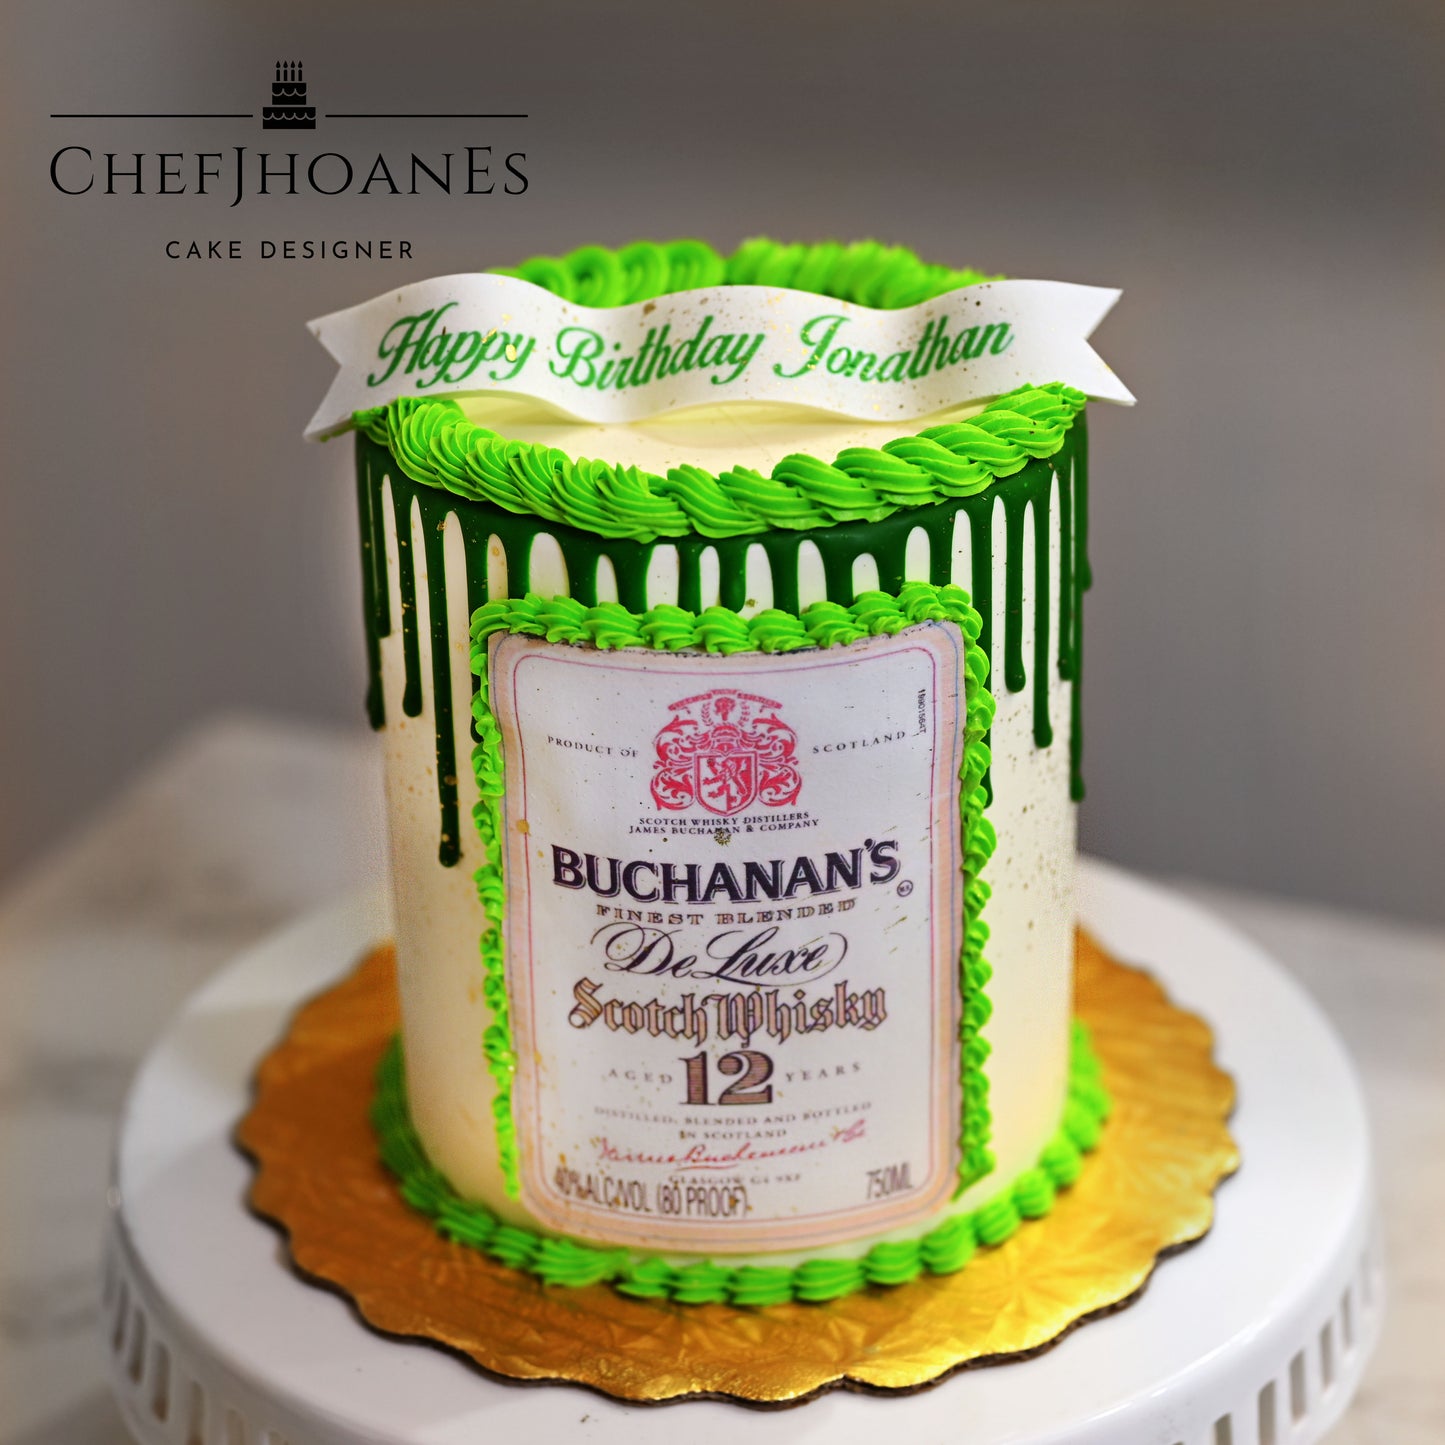 Buchanan's Cake